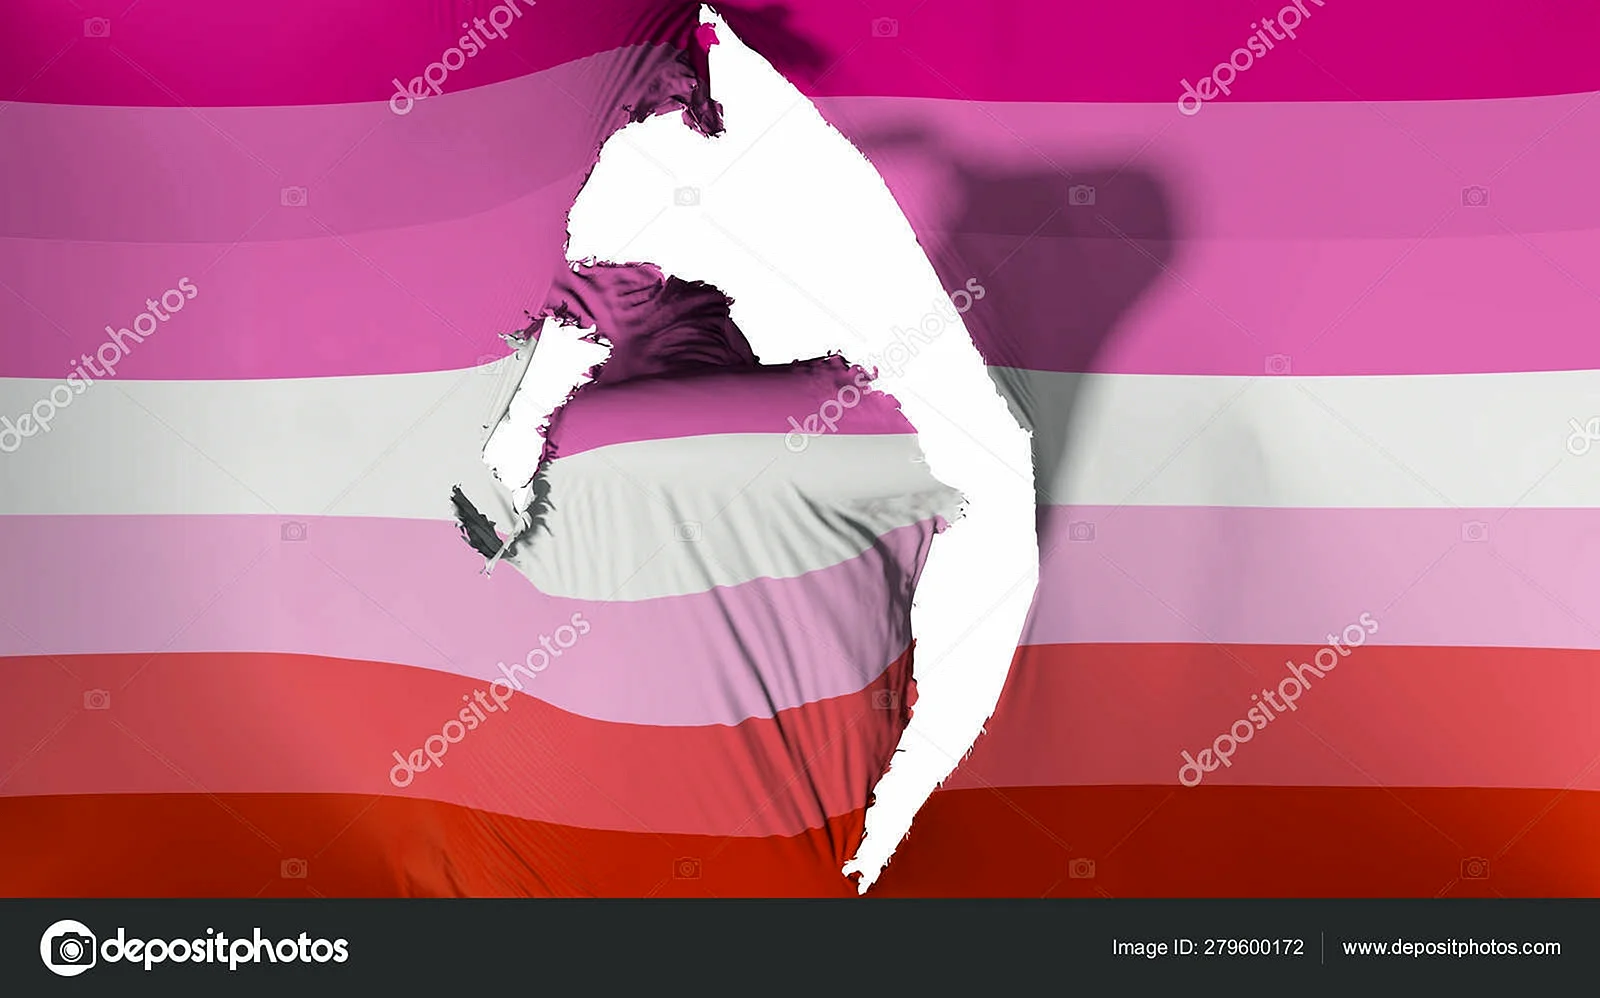 Lesbian Flag Background Wallpaper